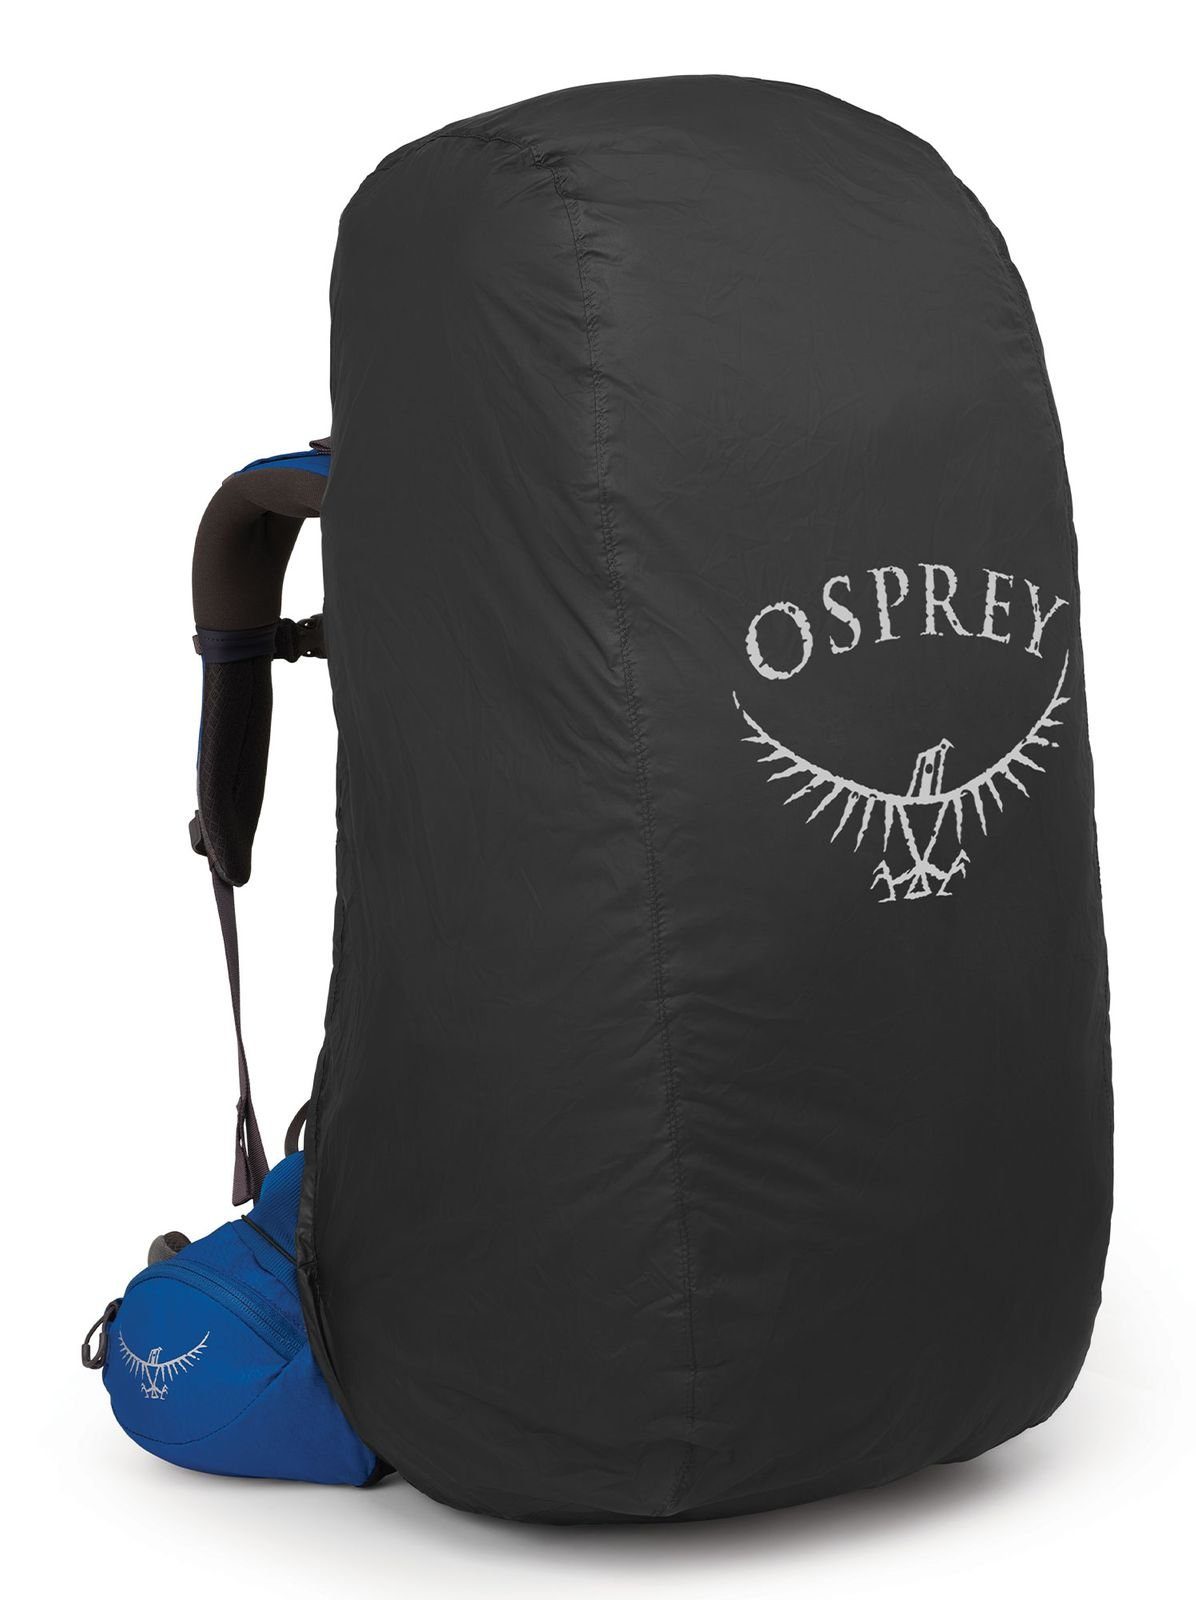 Osprey Rucksack-Regenschutz Ultralight